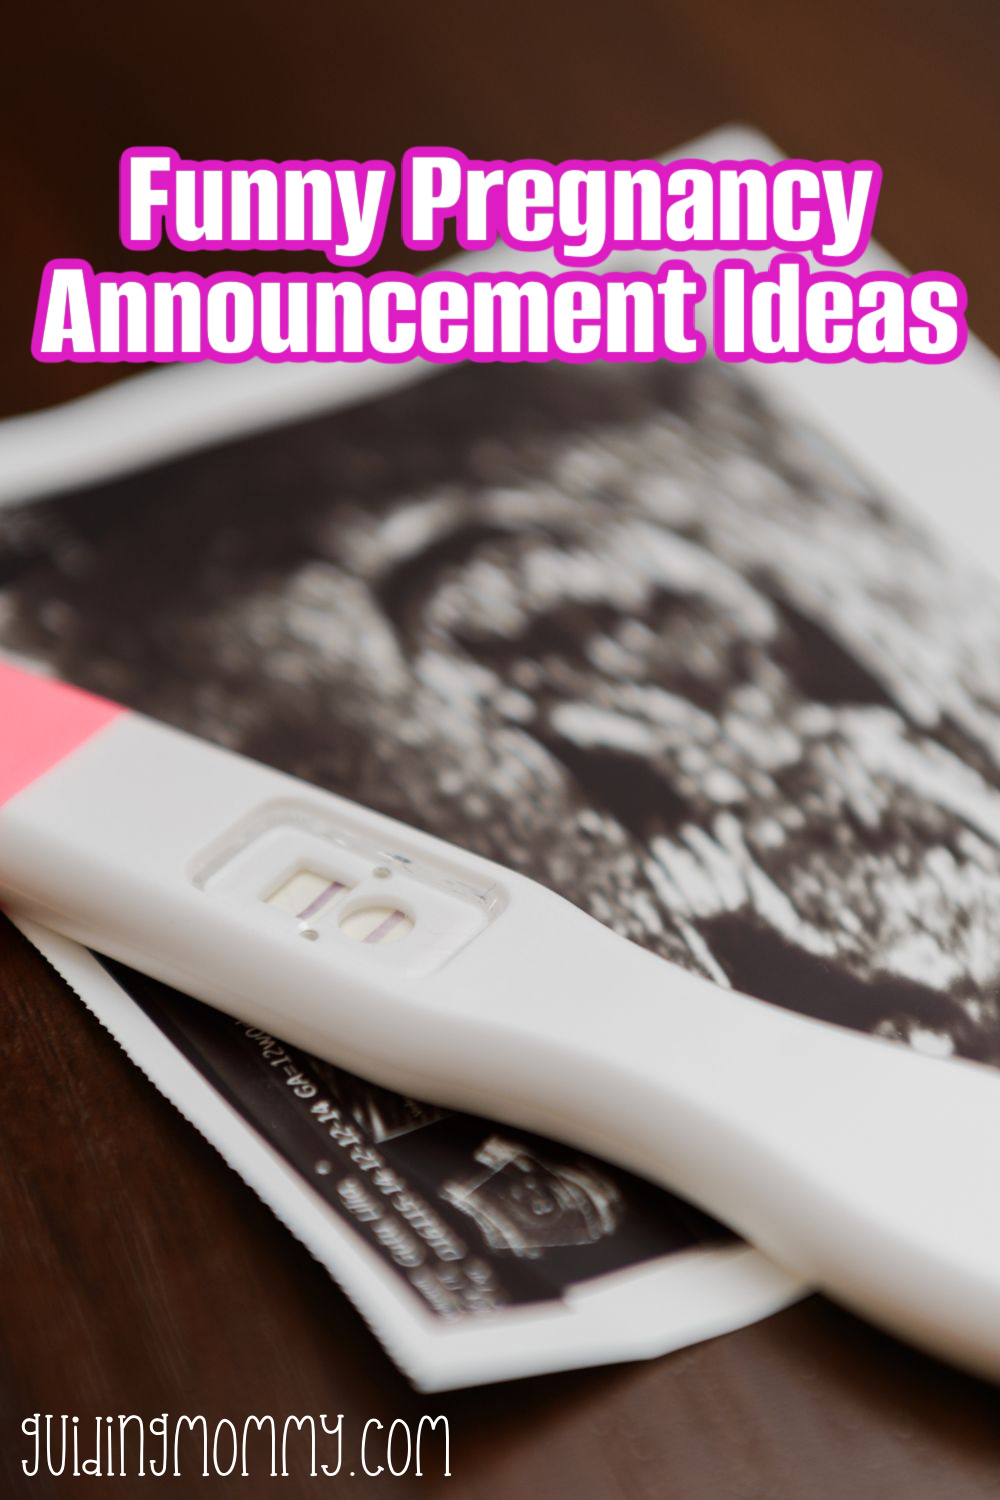 Funny Pregnancy Announcement ideas